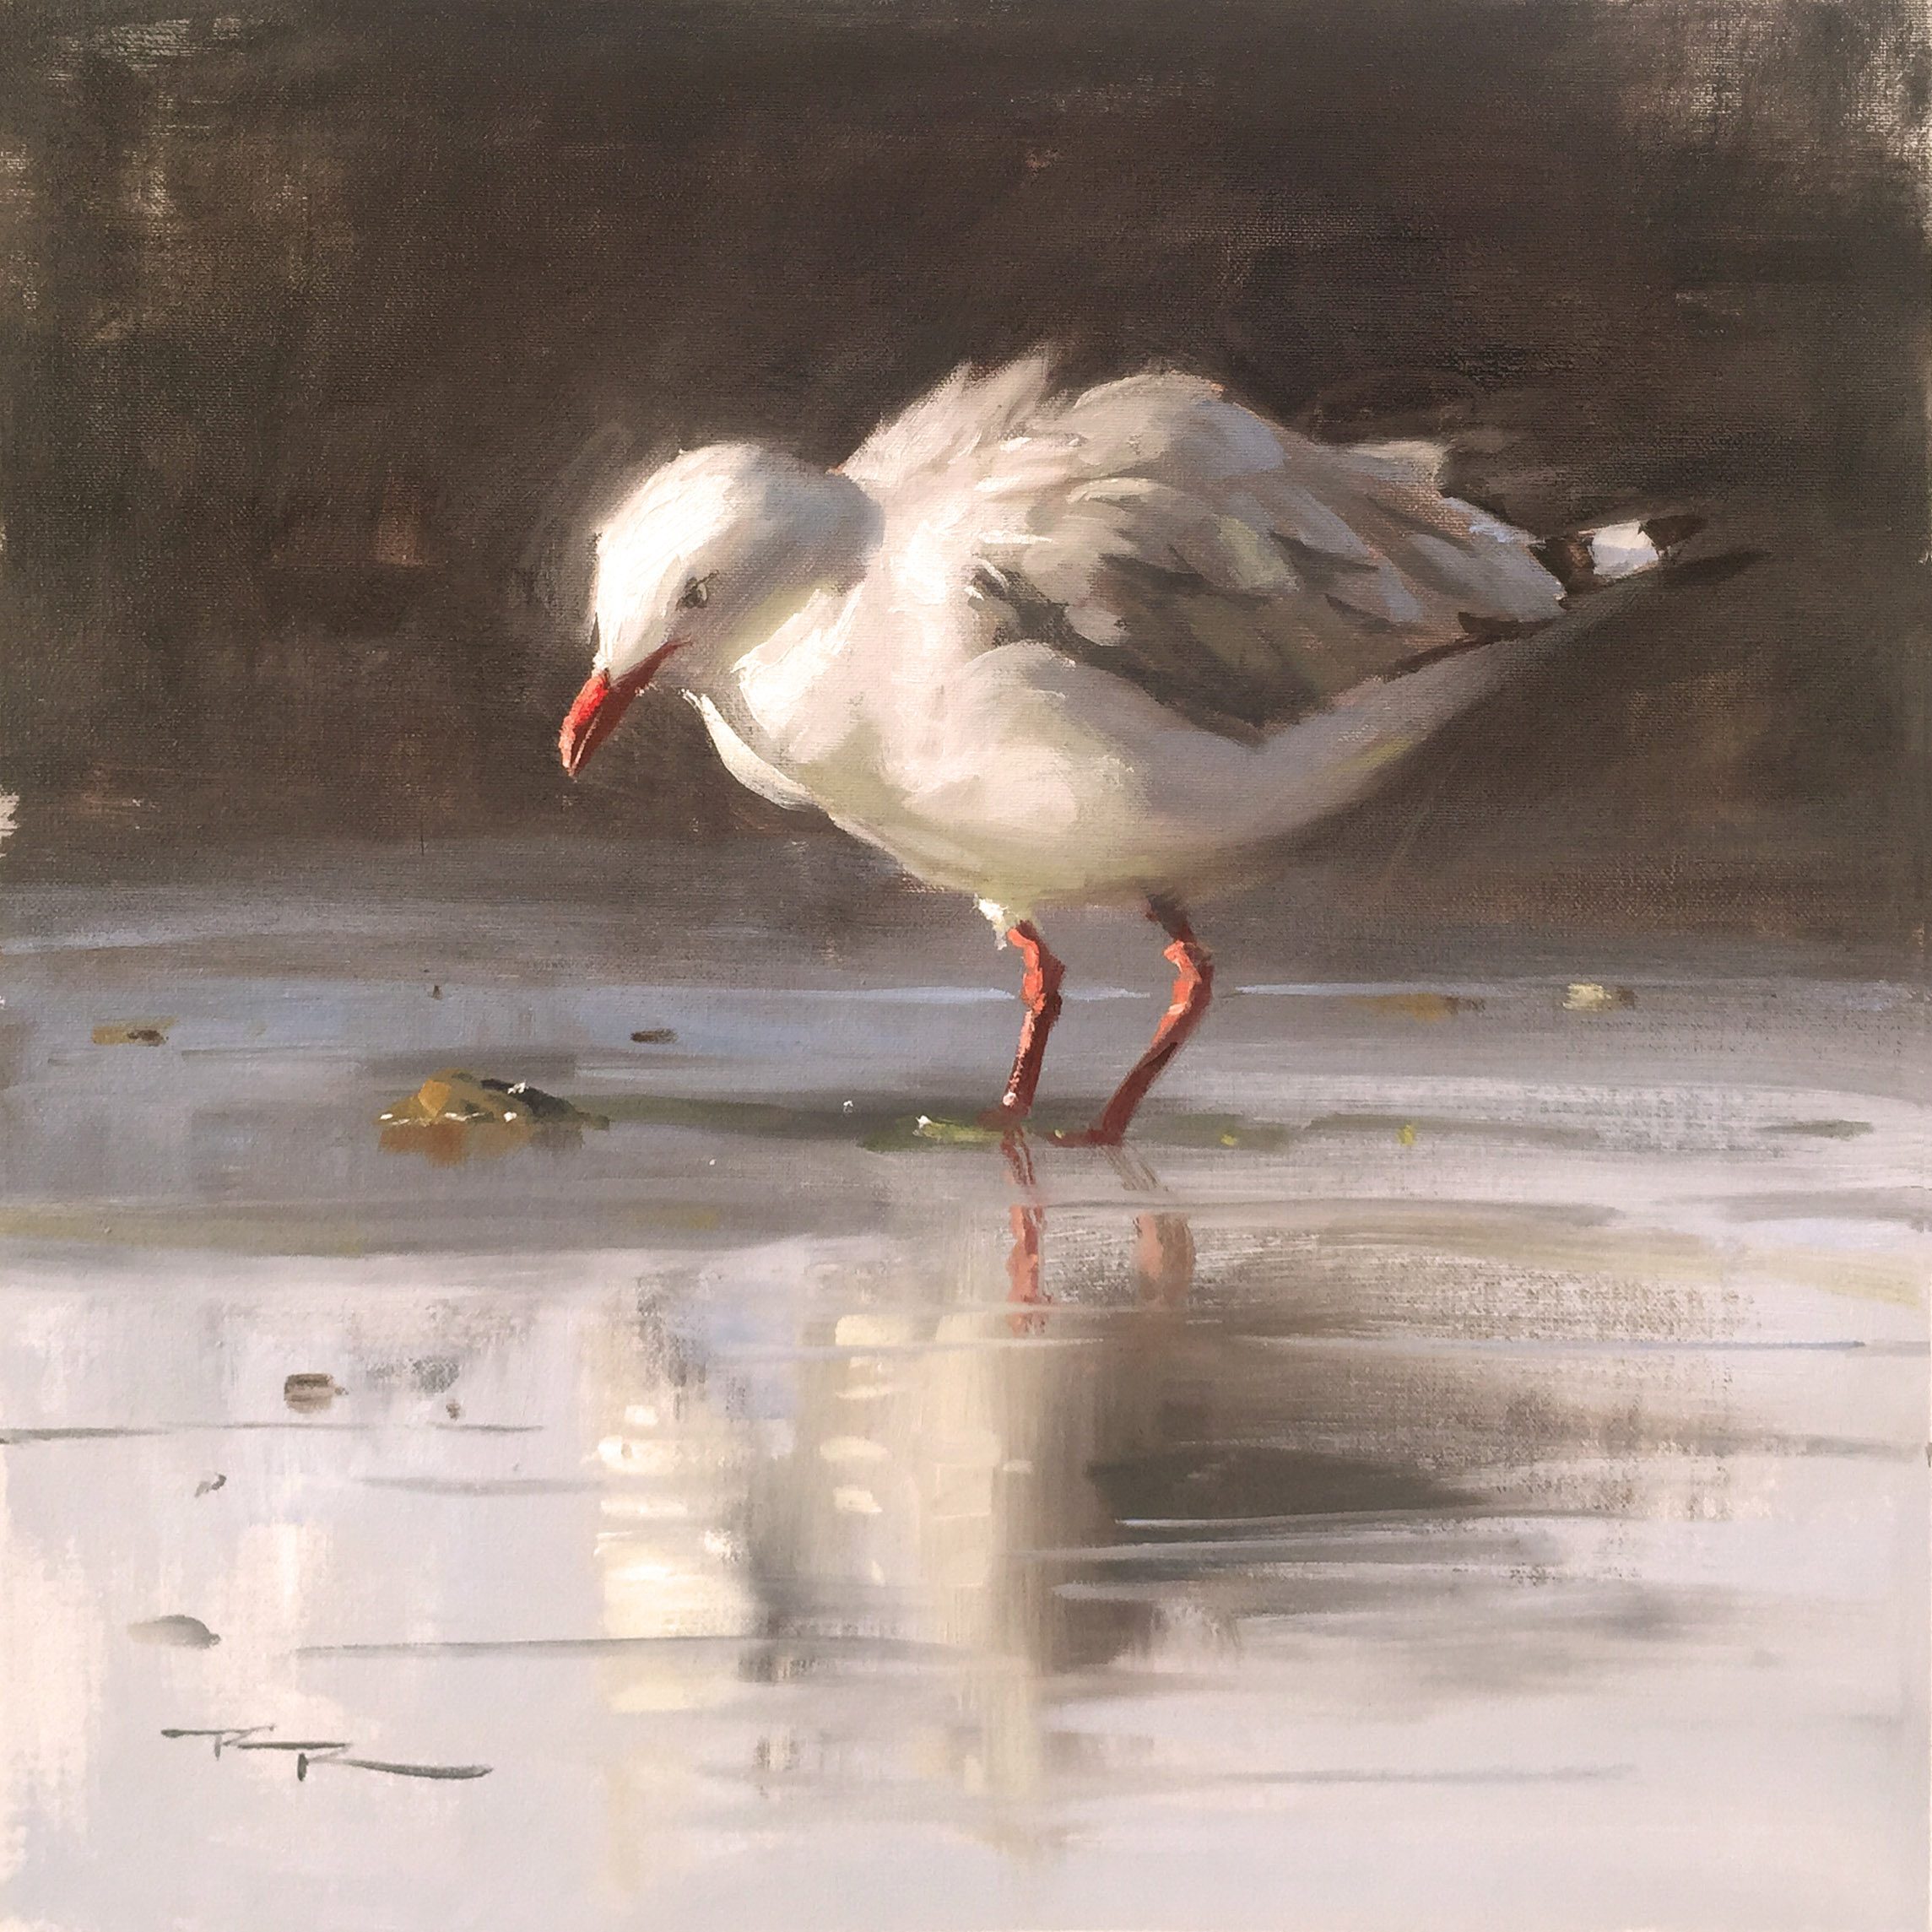 Painting Critiques - Jonathan Seagull